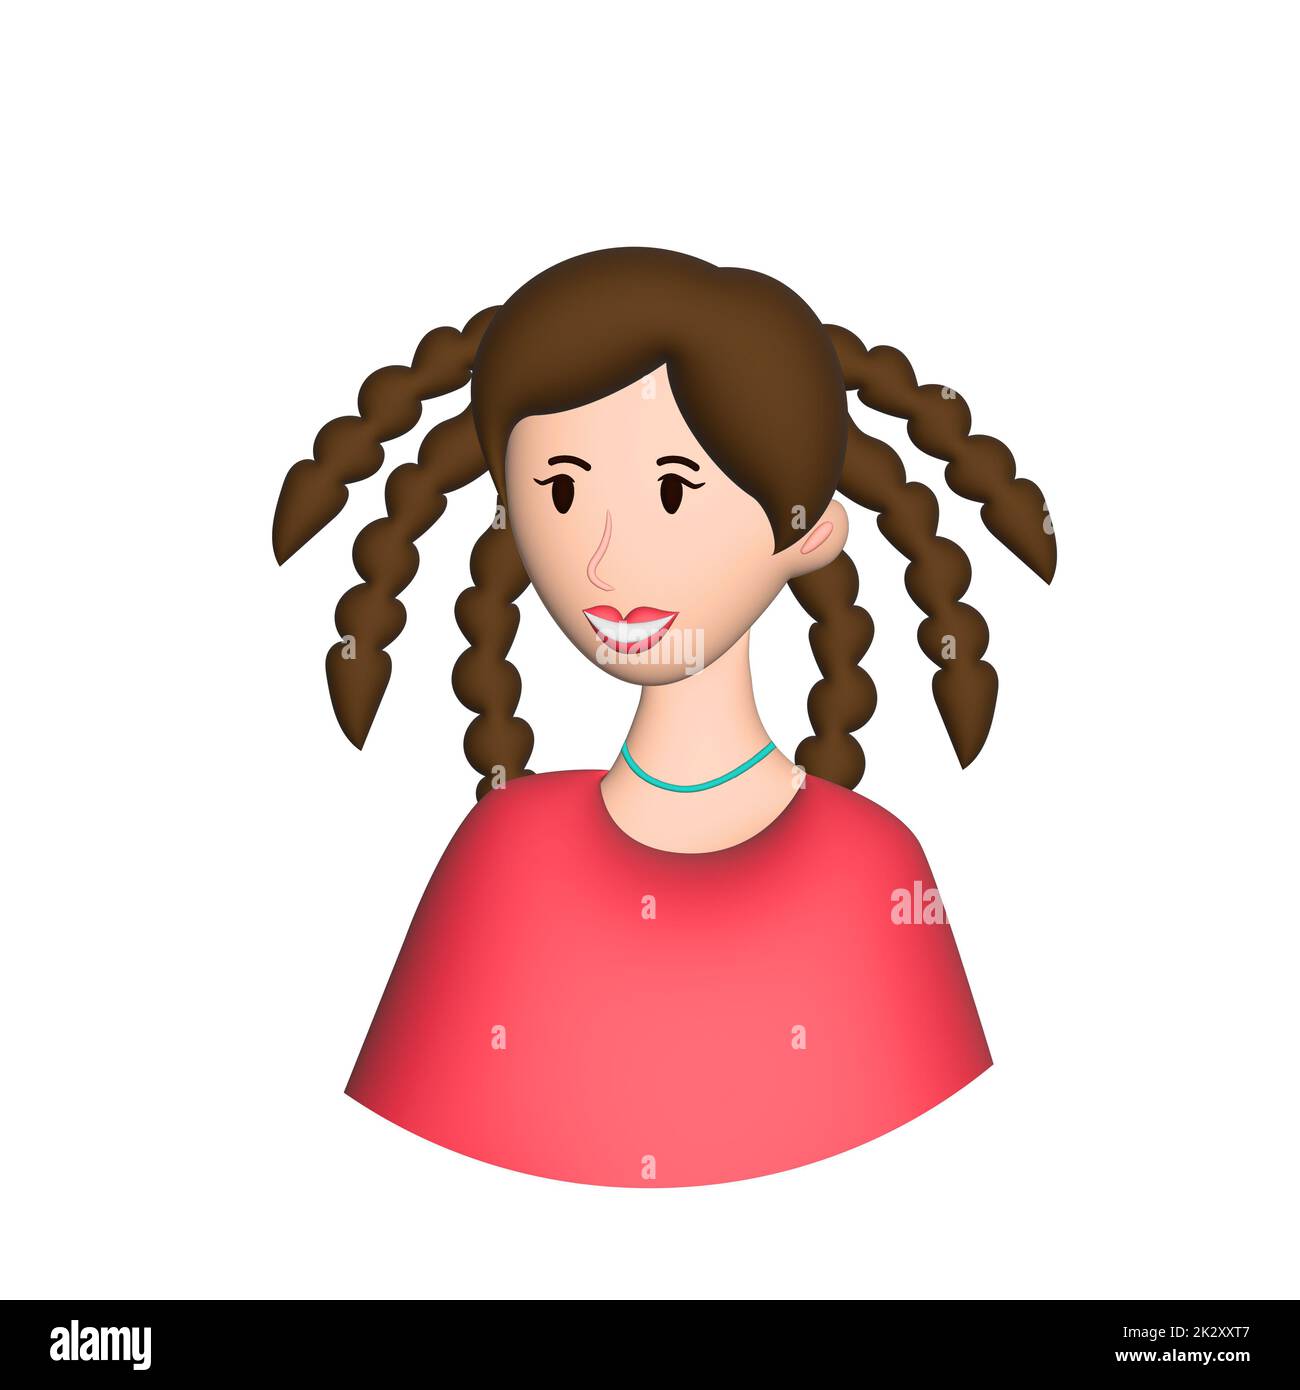 Web icon man, girl with many braids Stock Photo